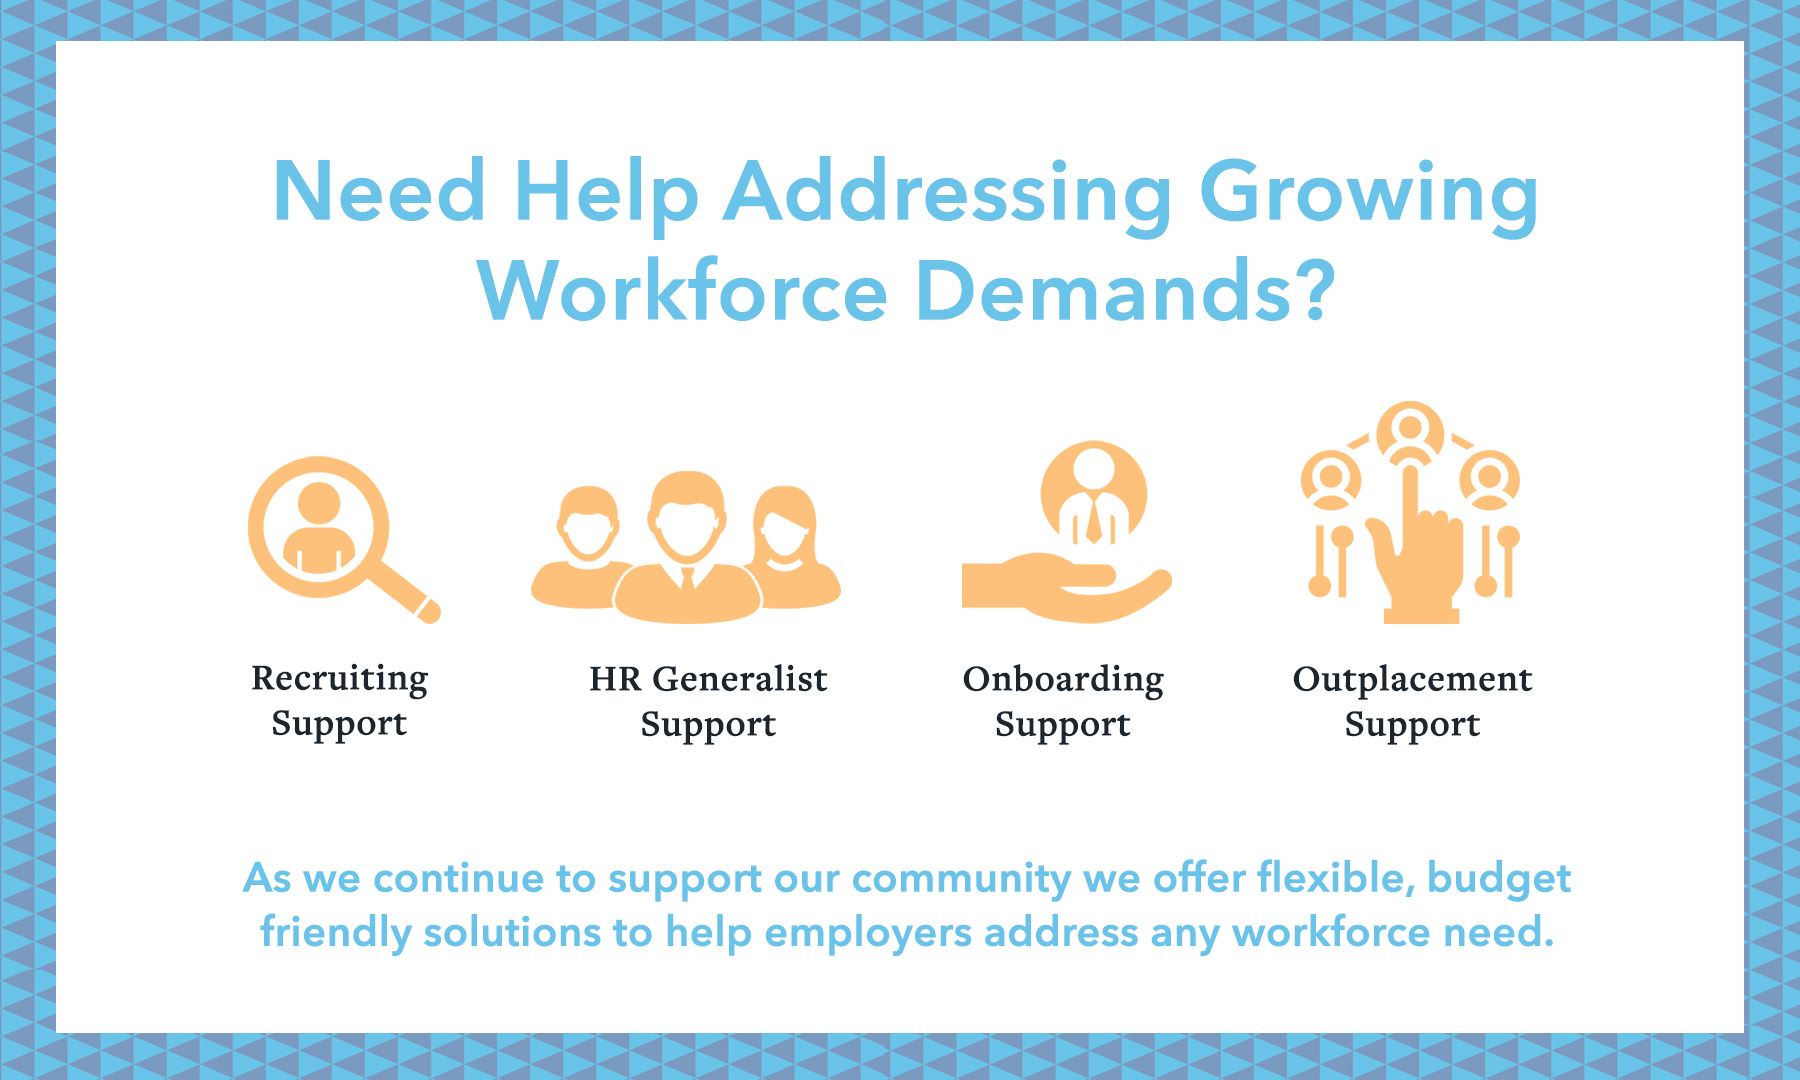 Need Help Addressing Growing Workforce Demands?